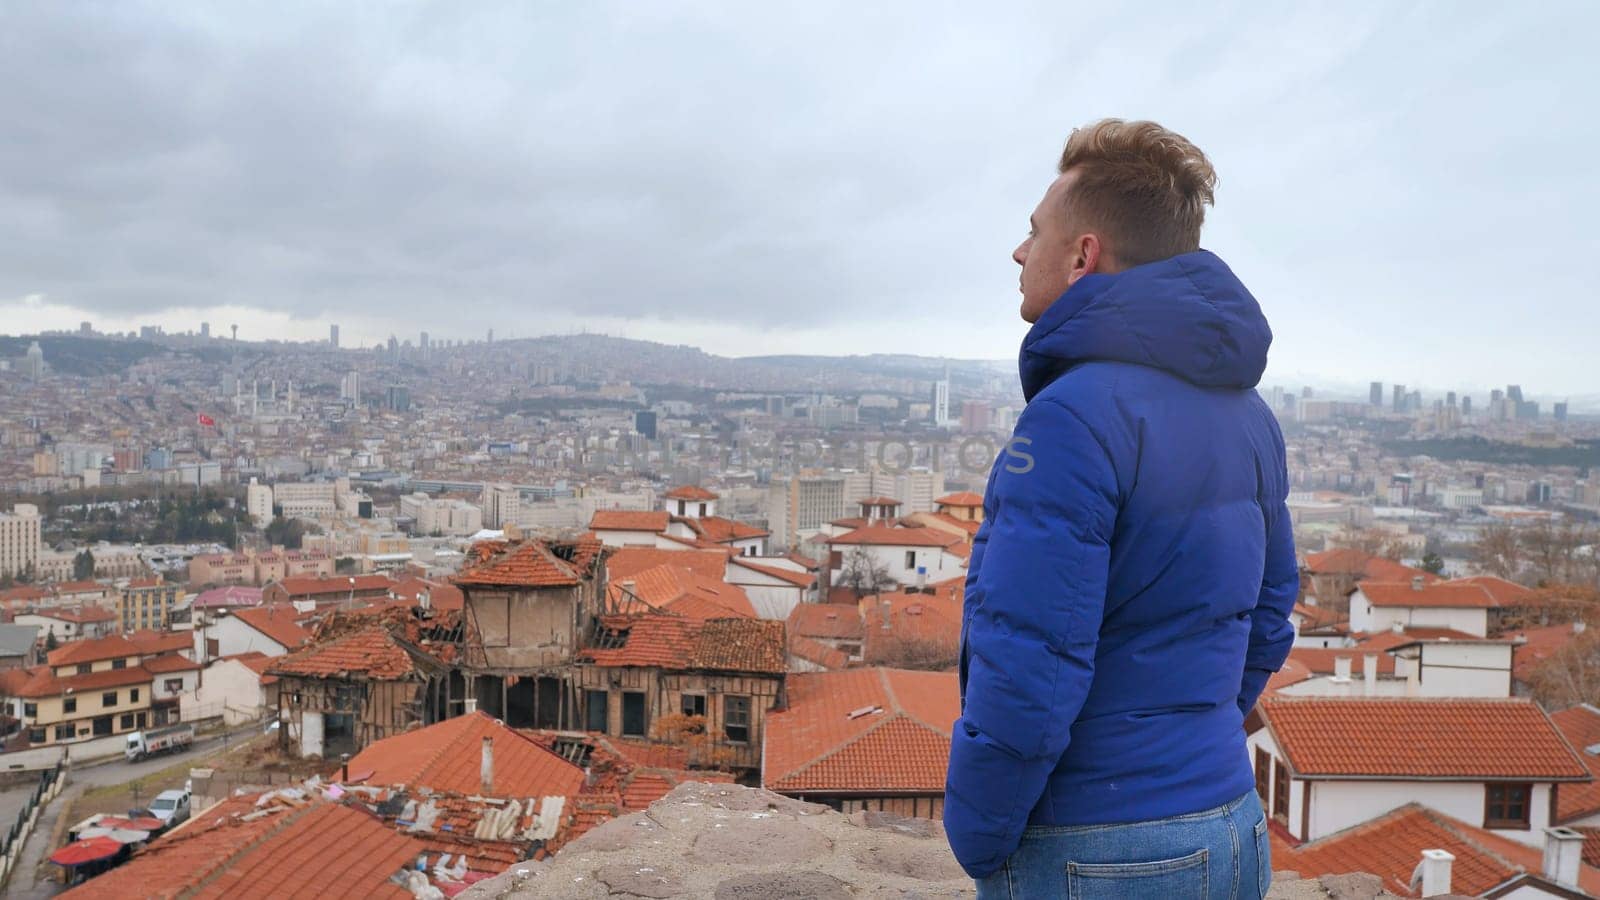 A tourist looks at the panorama of Ankara, the capital of Turkey